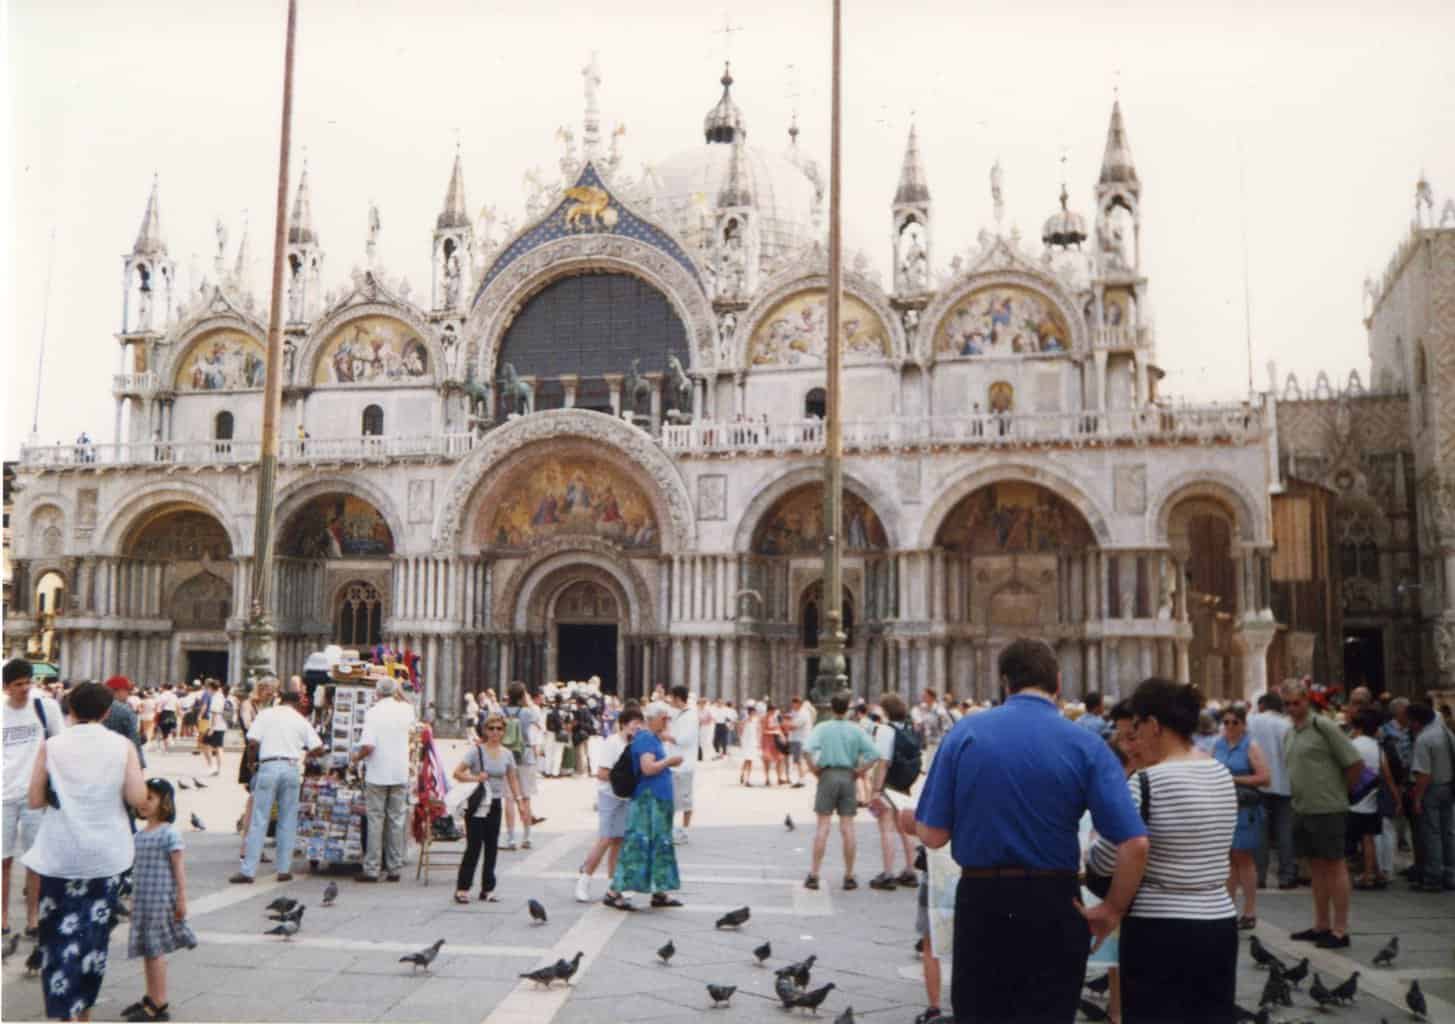 St_Mark's_Square,_Venice_-_scan01